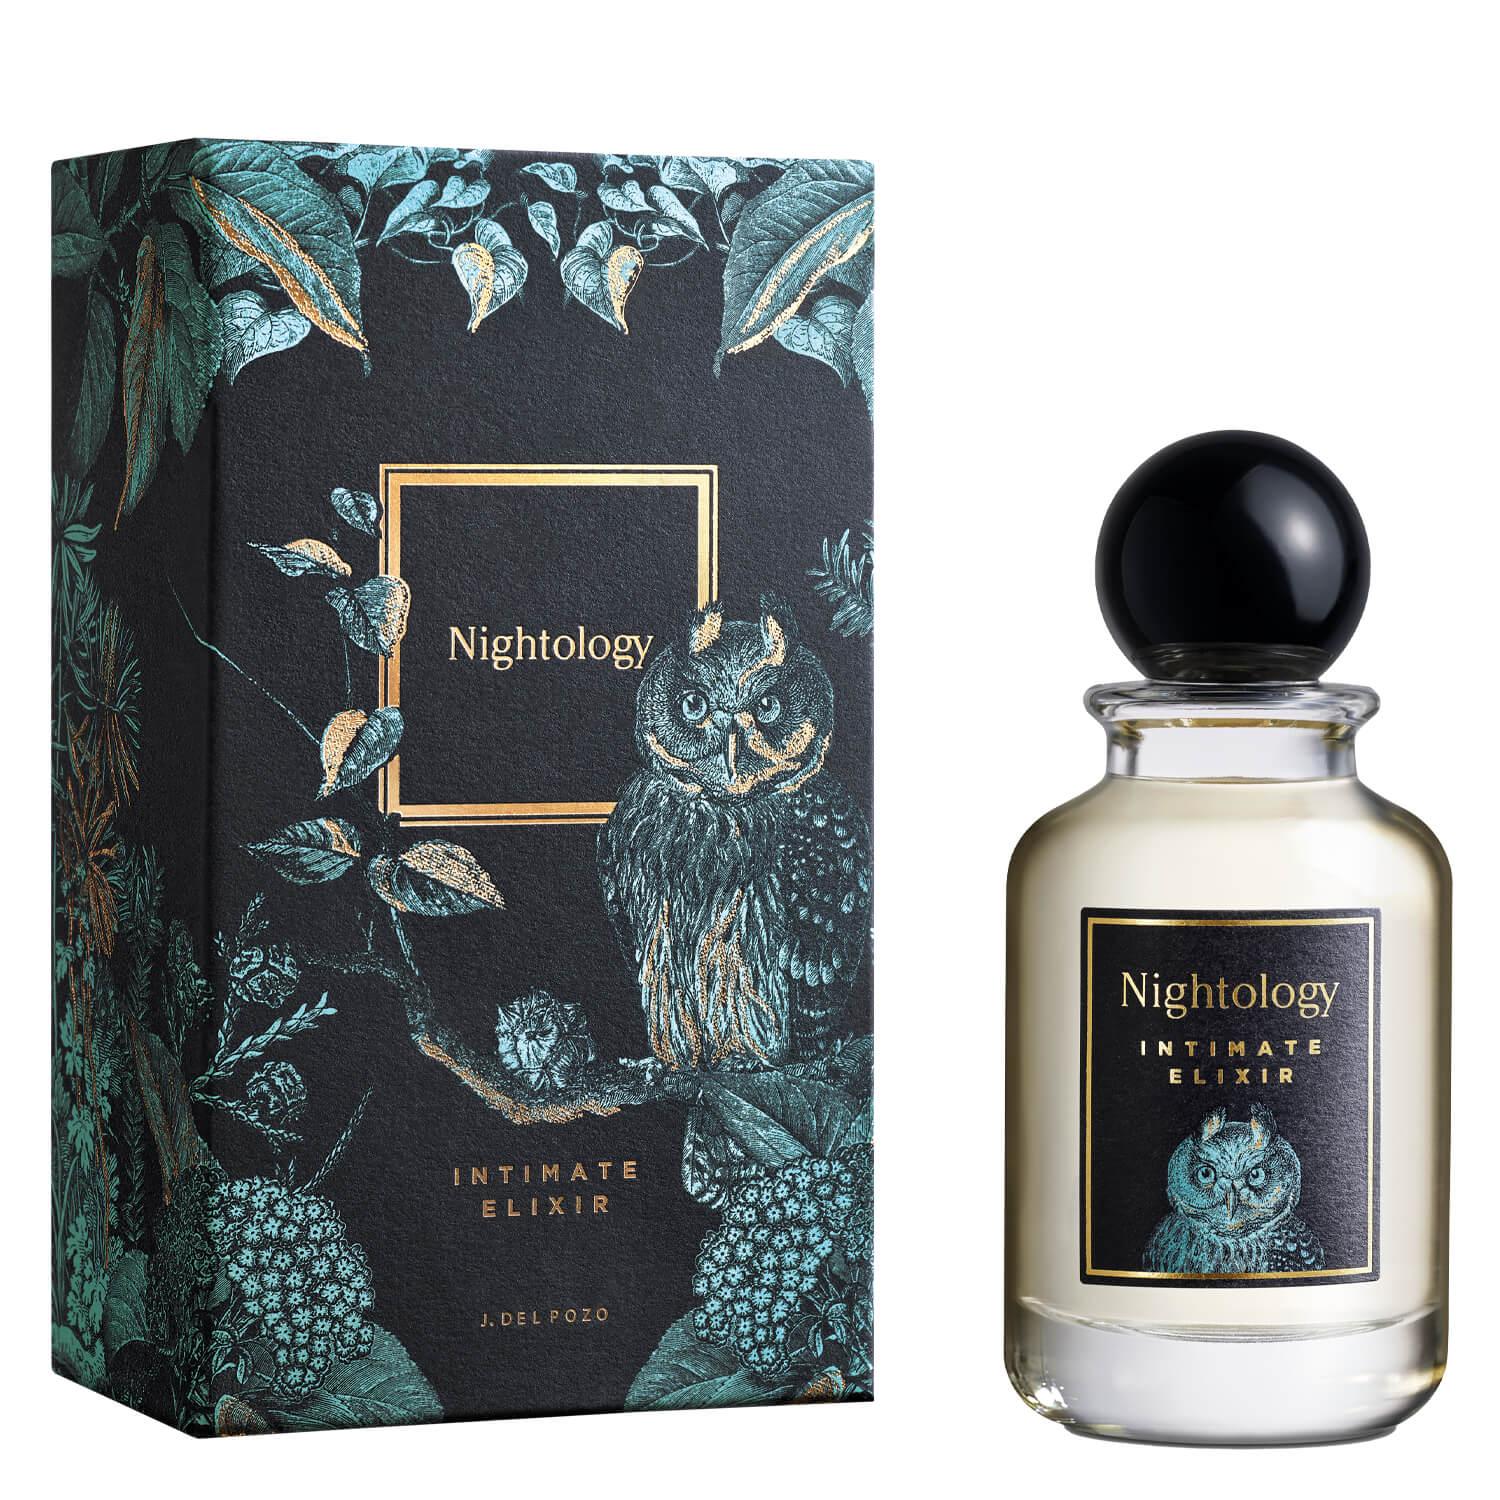 Nightology - Intimate Elixir Eau de Parfum